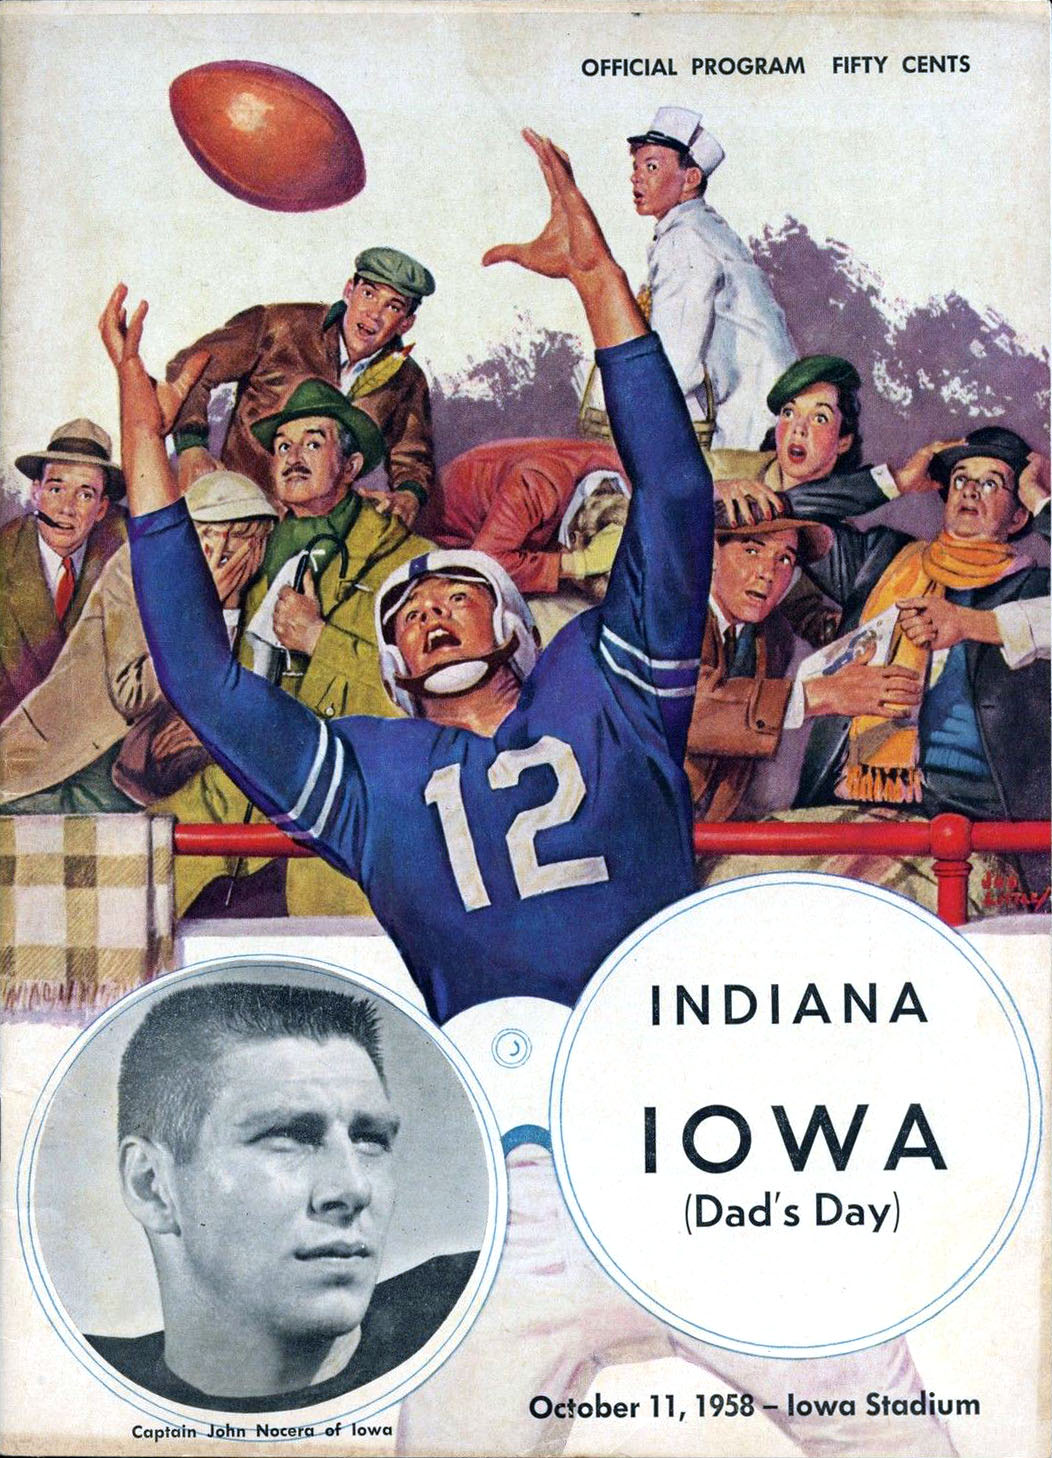 Iowa Hawkeyes vs. Indiana Hoosiers (October 11, 1958)